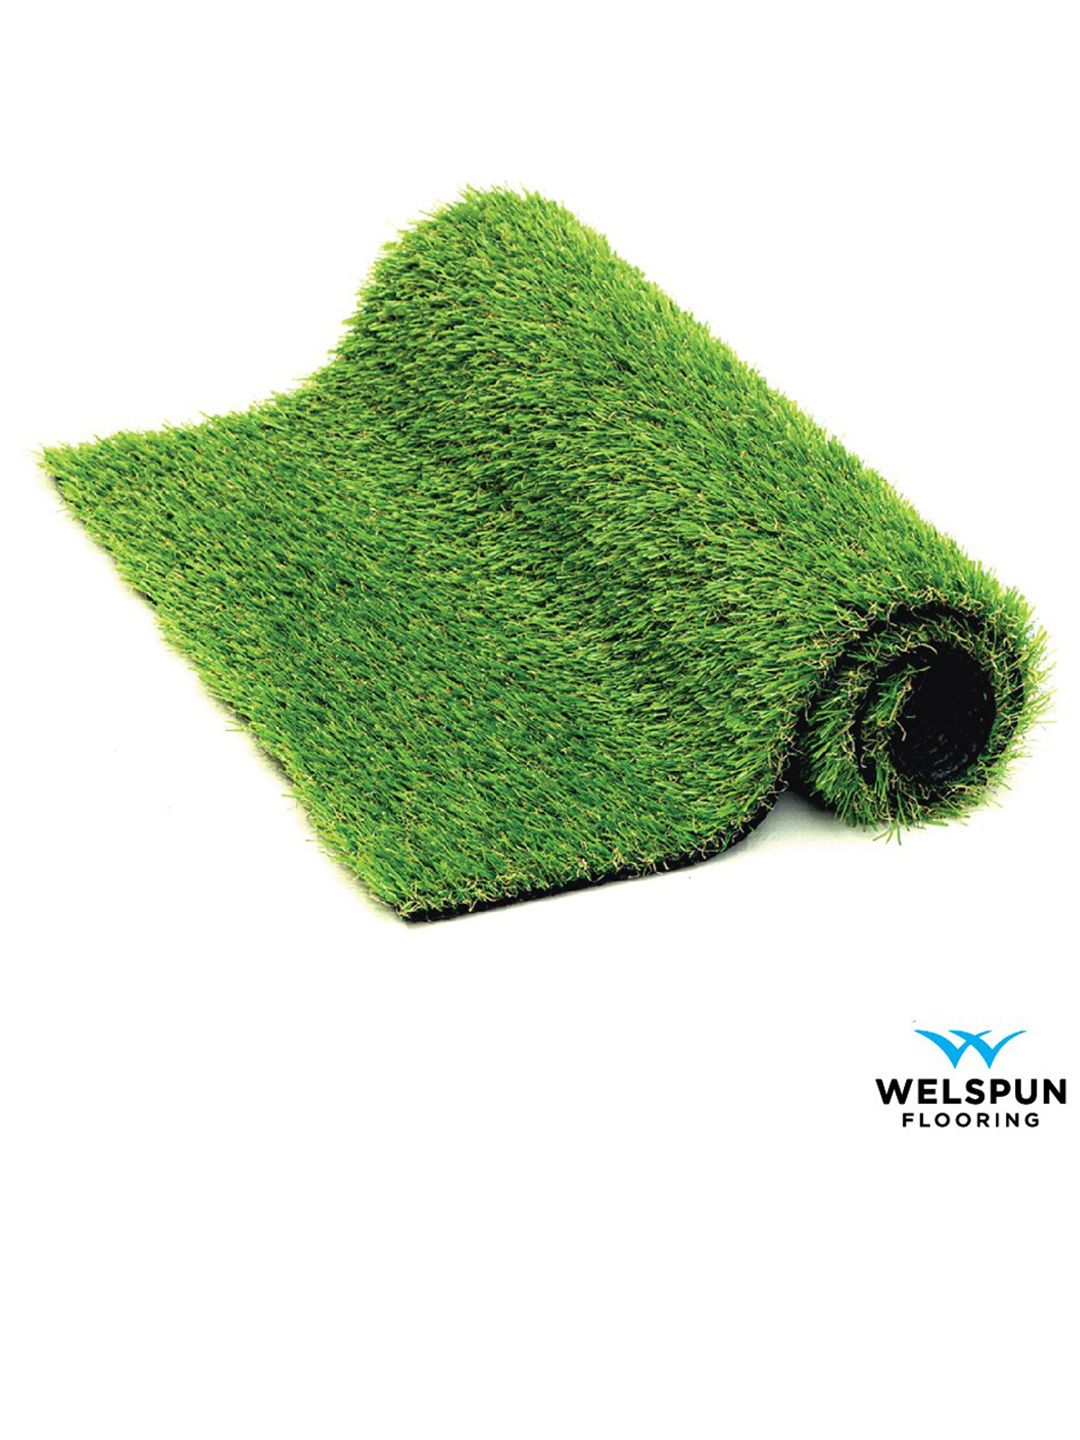 Welspun Green Set of 2 Fake Grass Fade Resistant Durable Doormat Price in India